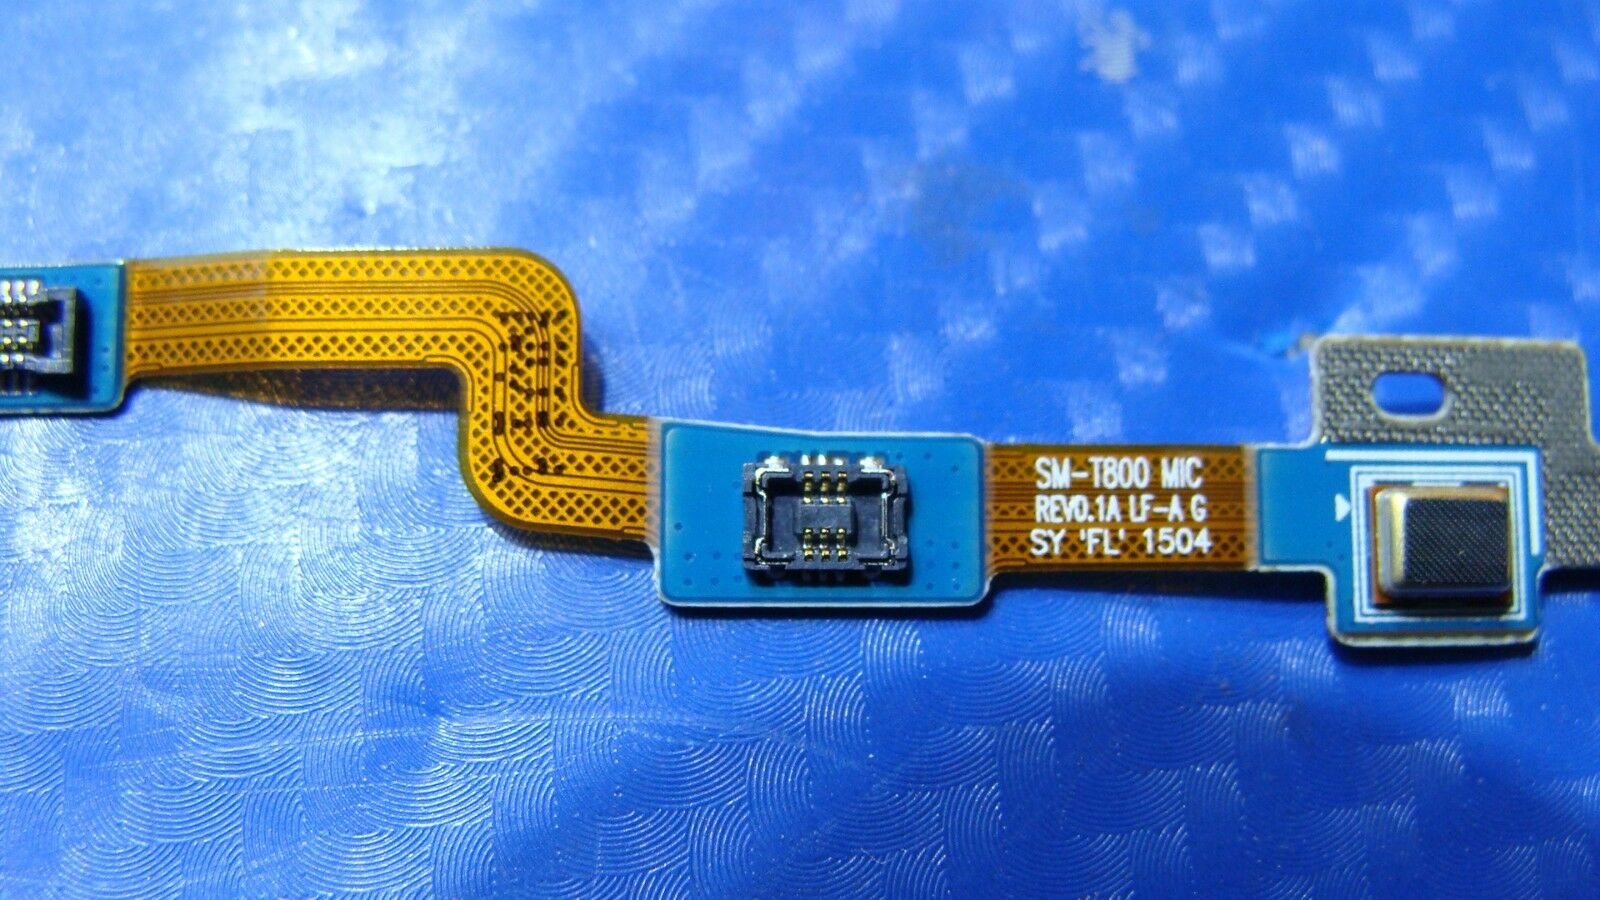 Samsung Galaxy Tab S SM-T807V 10.5